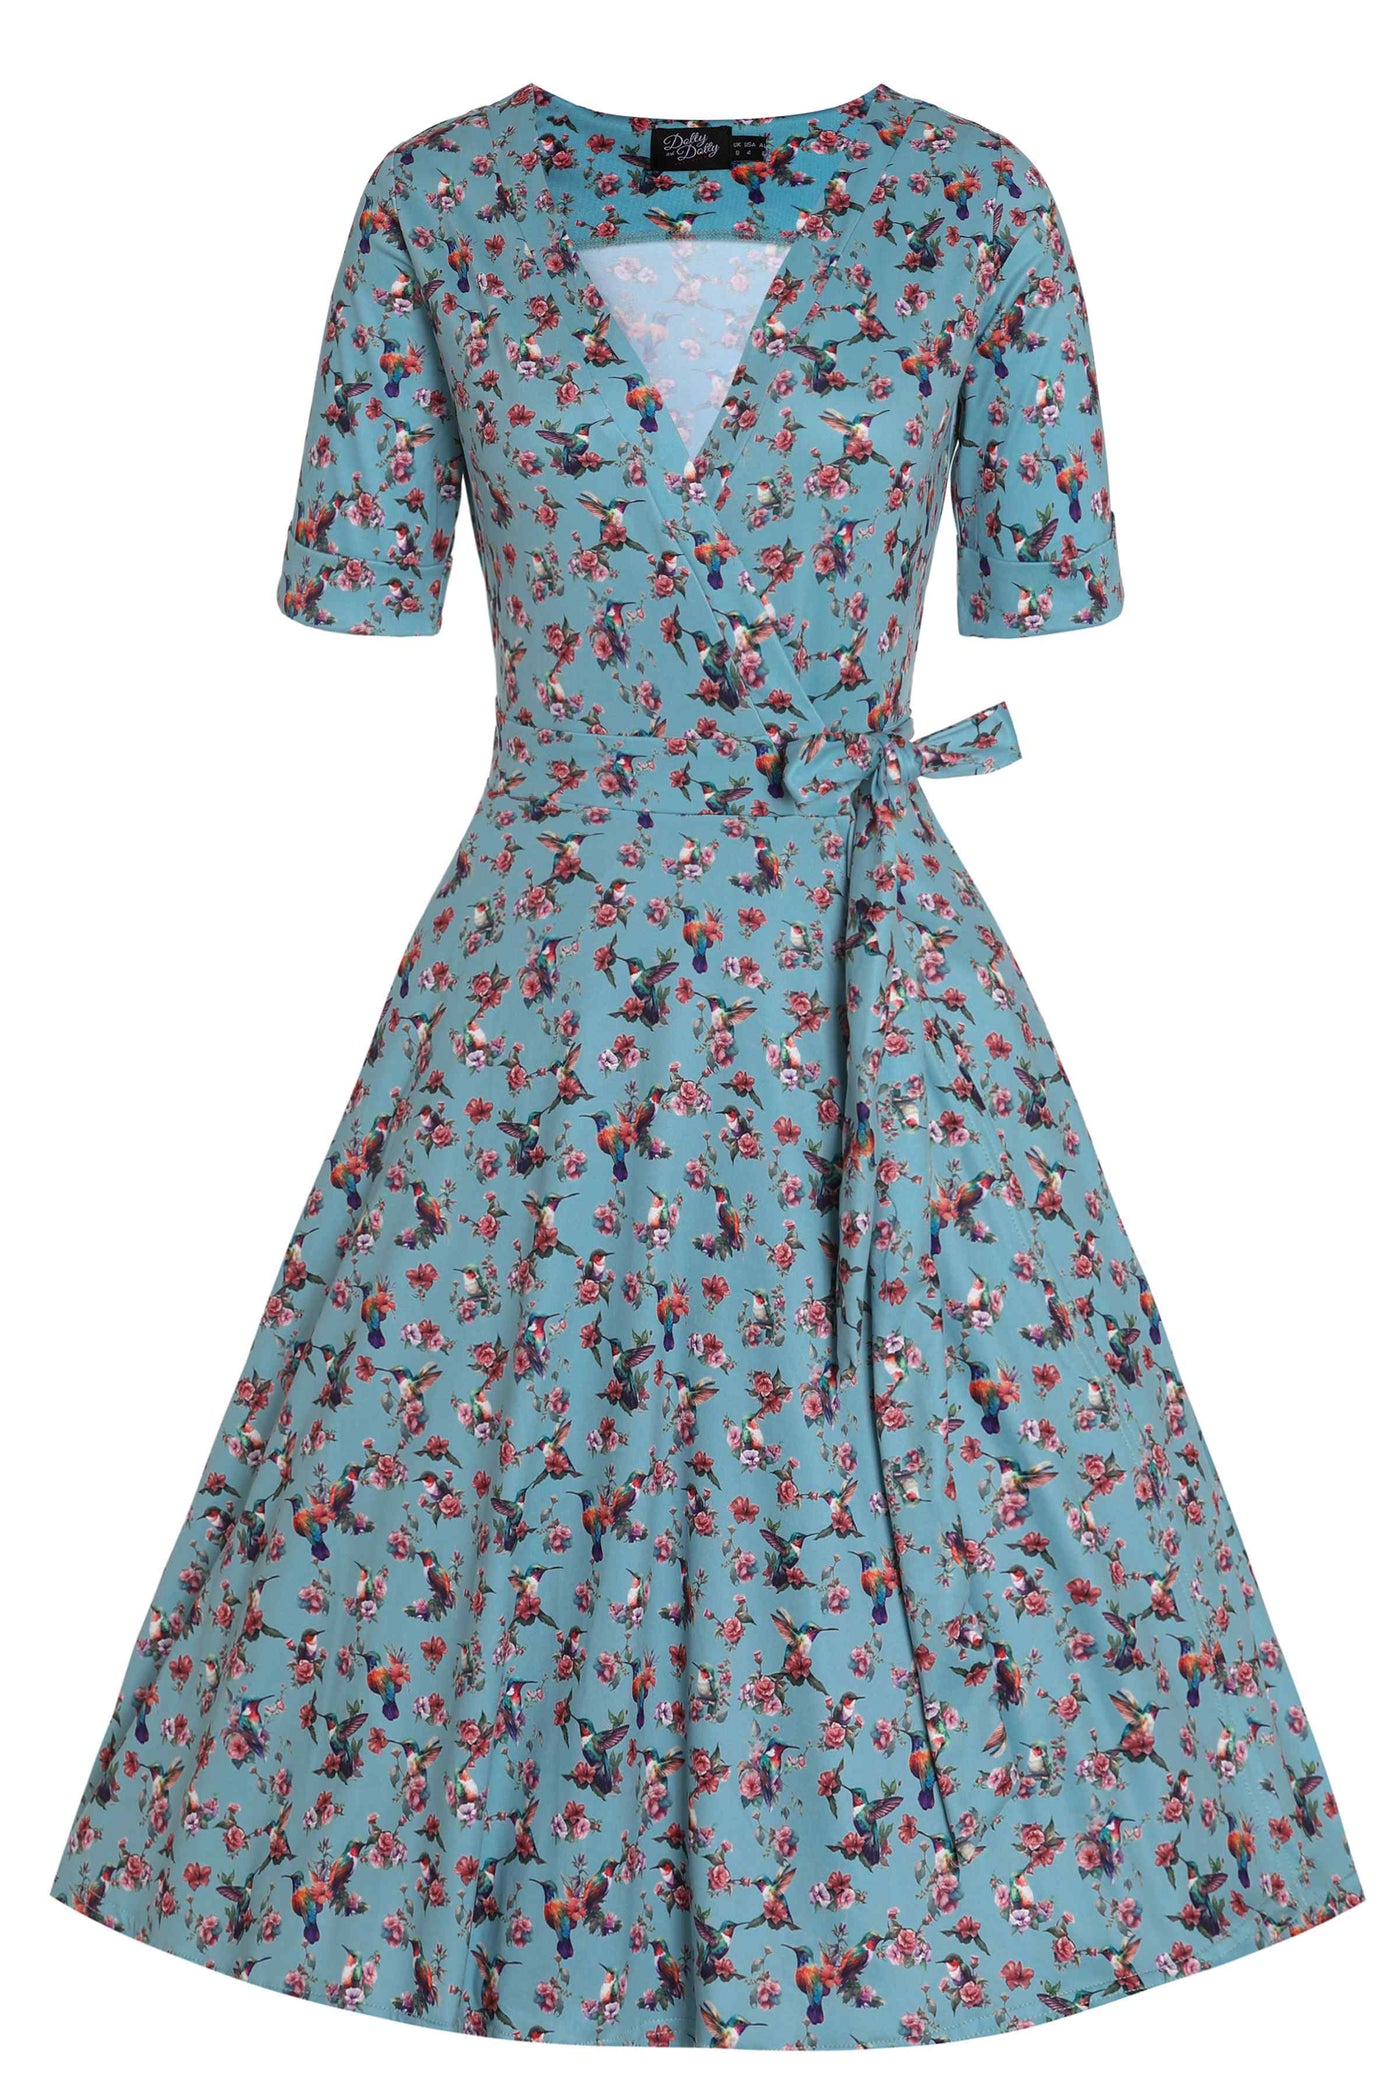 Front View of Hummingbird Blue Wrap Dress